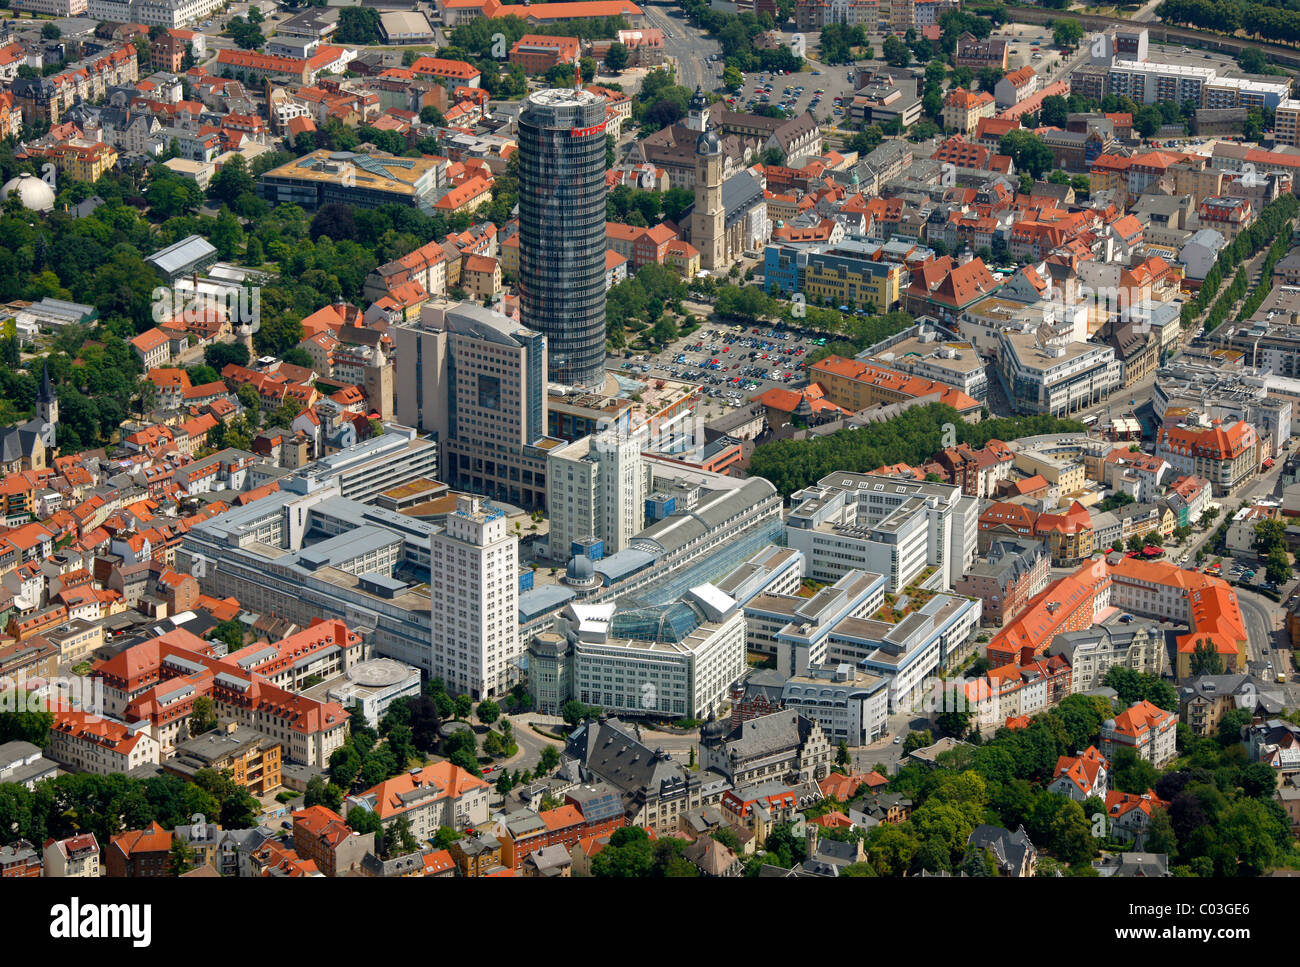 Aerial view, JenTower, Jenoptik plant, University of Jena, Stadtmitte district, Jena, Thuringia, Germany, Europe Stock Photo